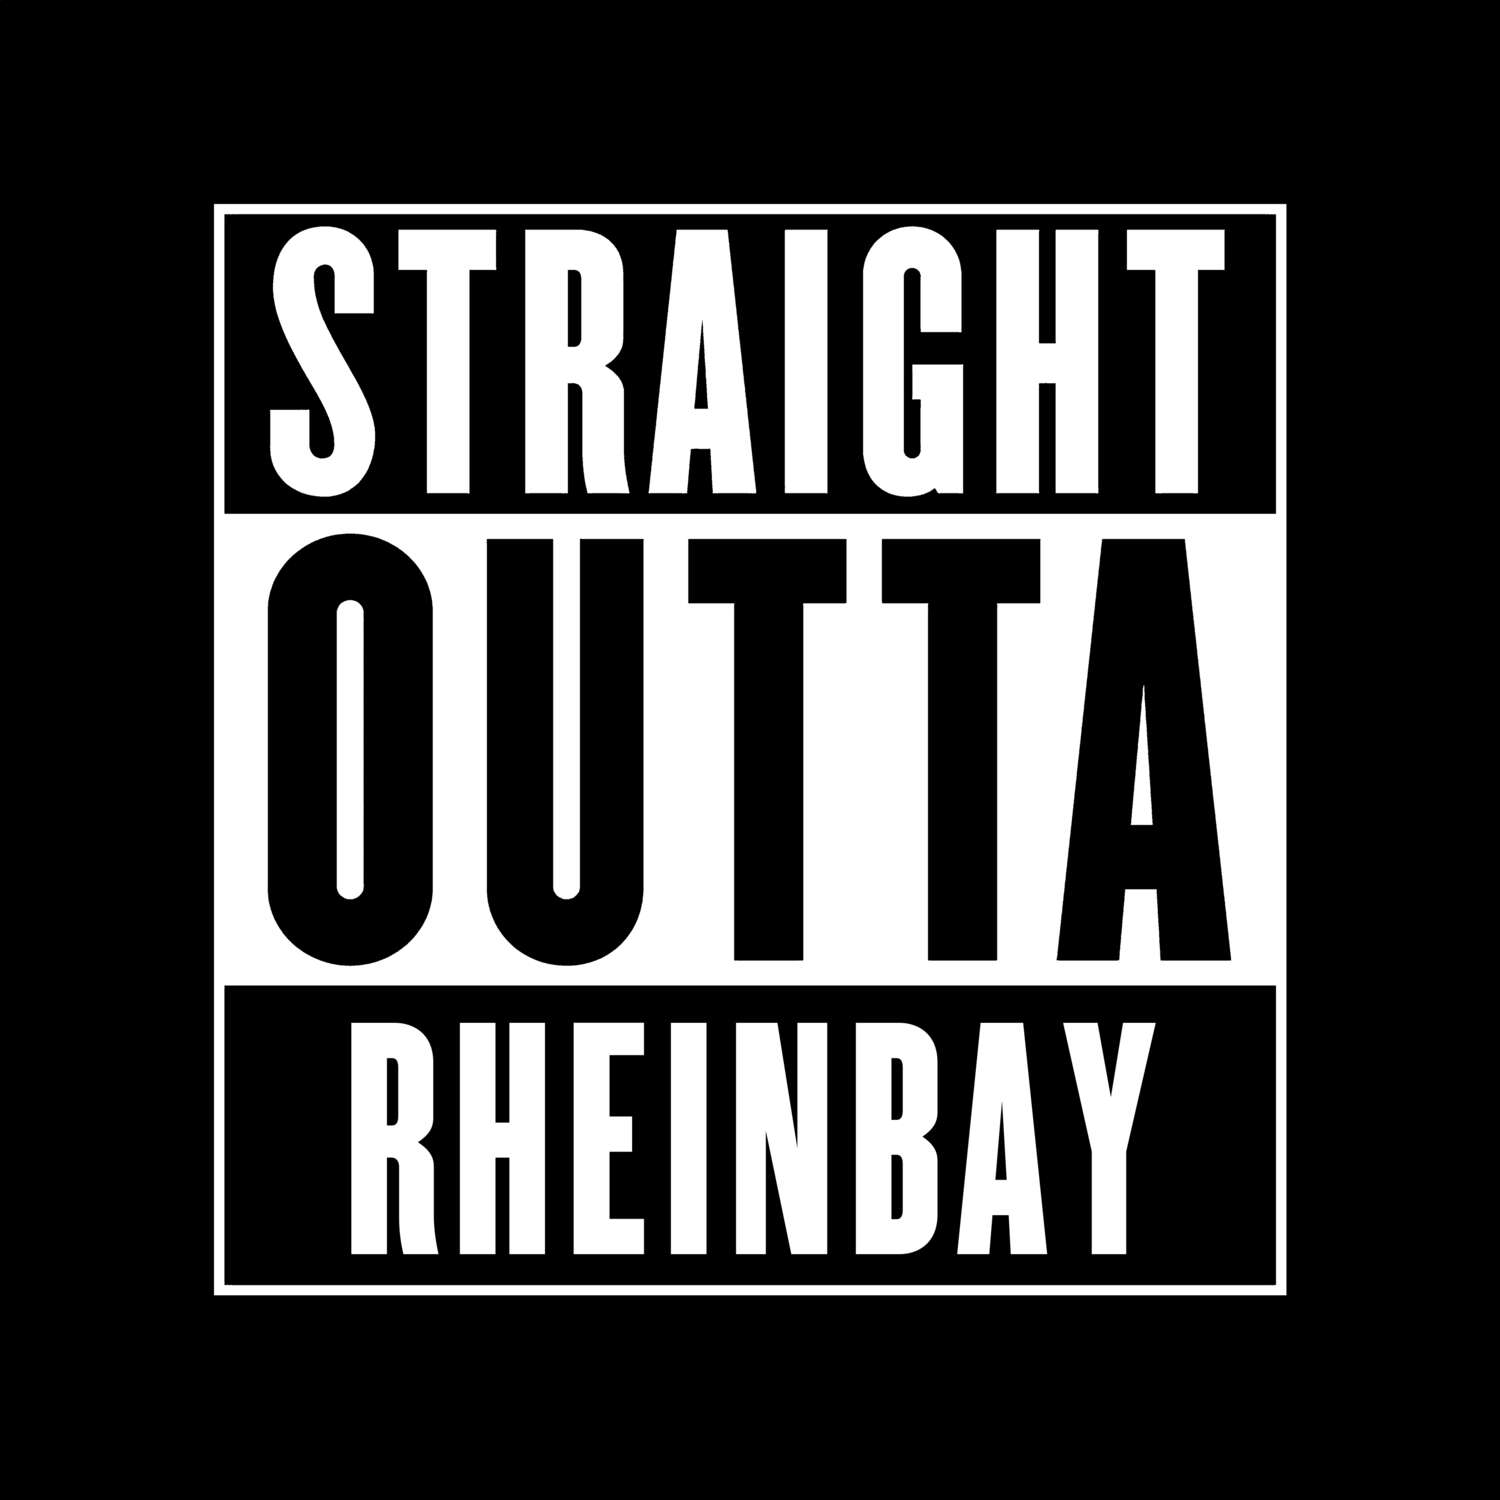 Rheinbay T-Shirt »Straight Outta«